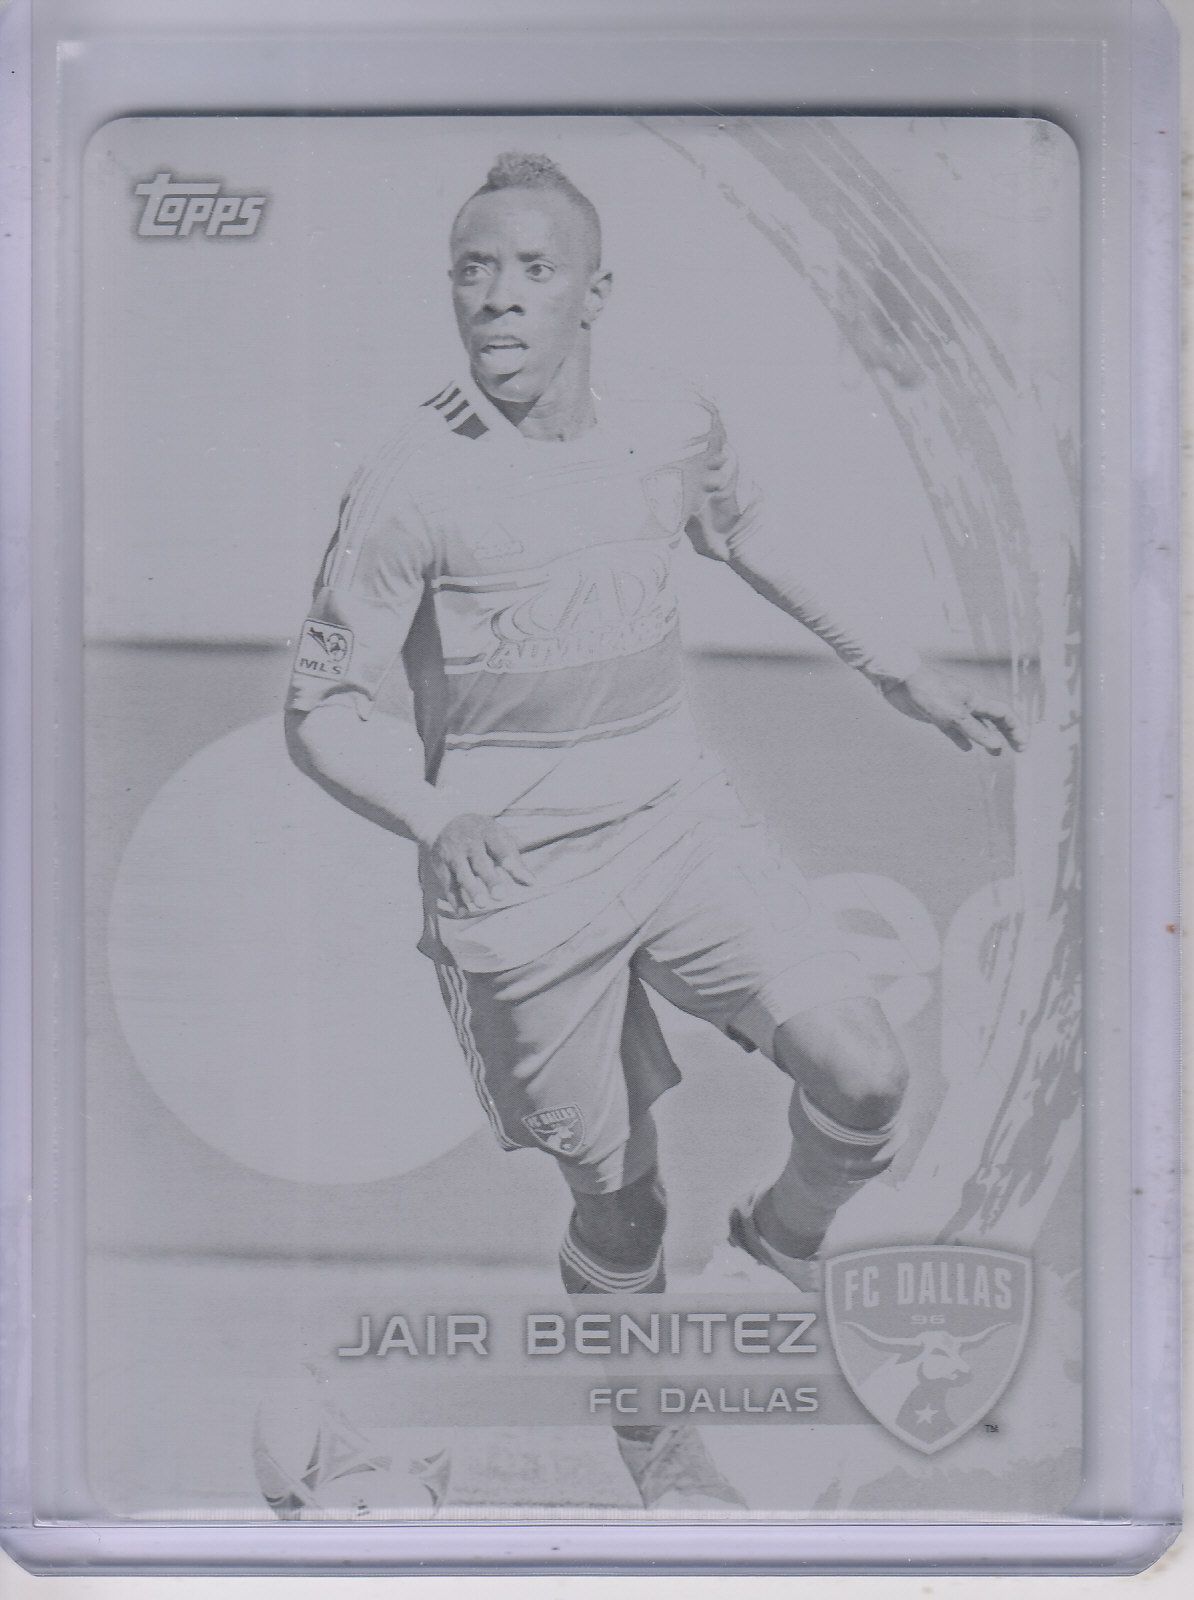  Jair Benitez player image